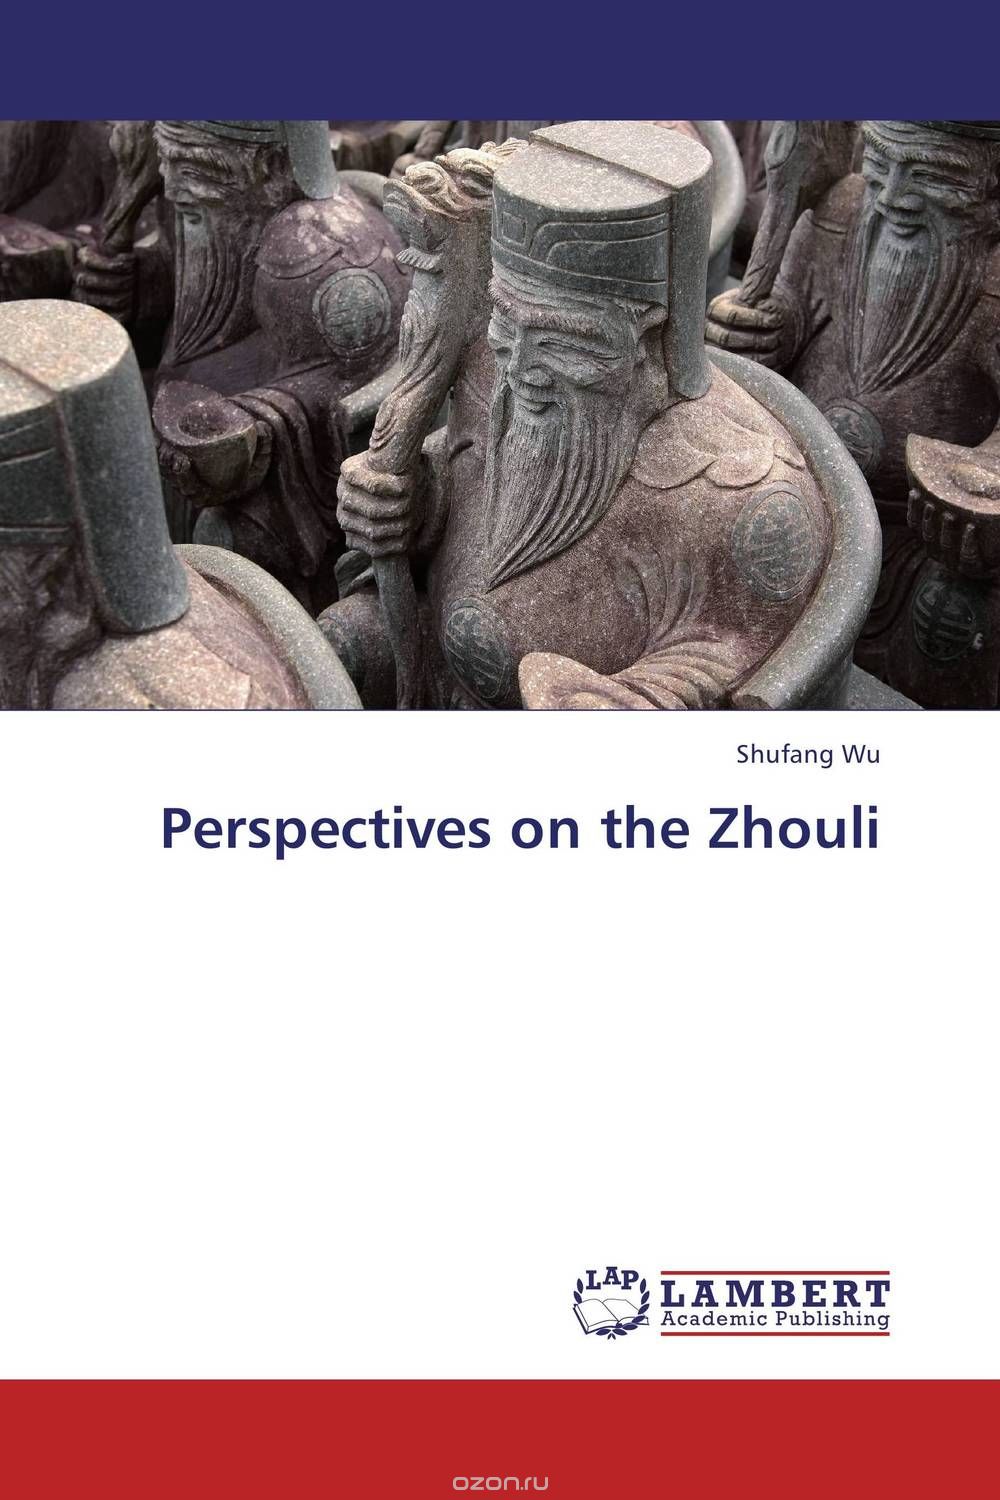 Скачать книгу "Perspectives on the Zhouli"